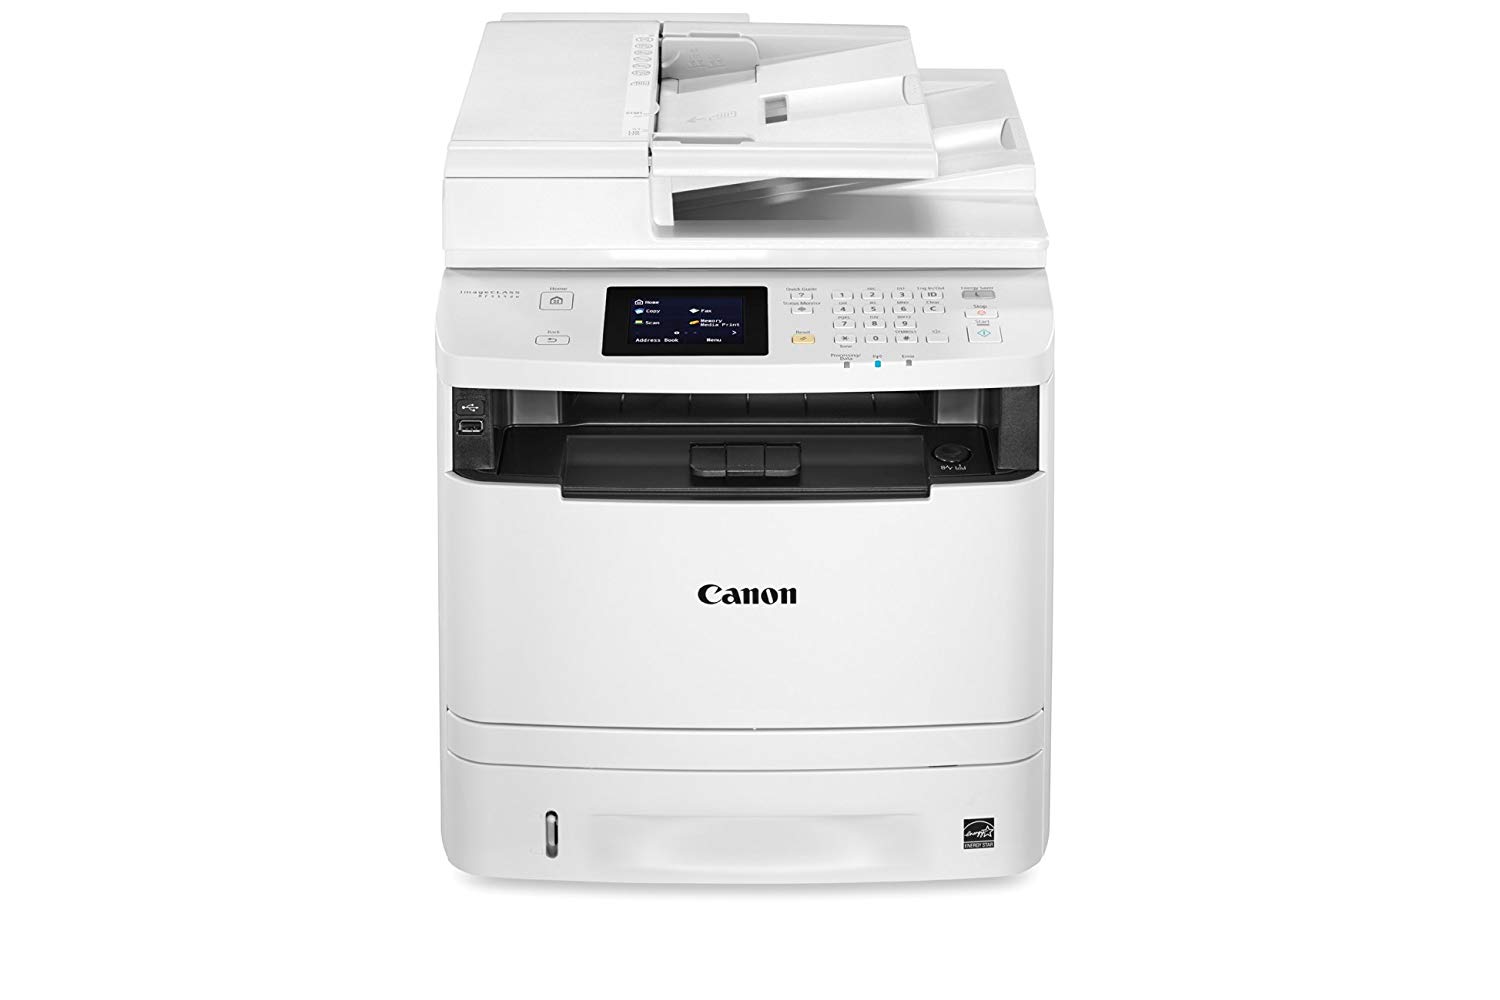 Canon imageCLASS MF414dw Wireless Monochrome Printer with Scanner, Copier & Fax